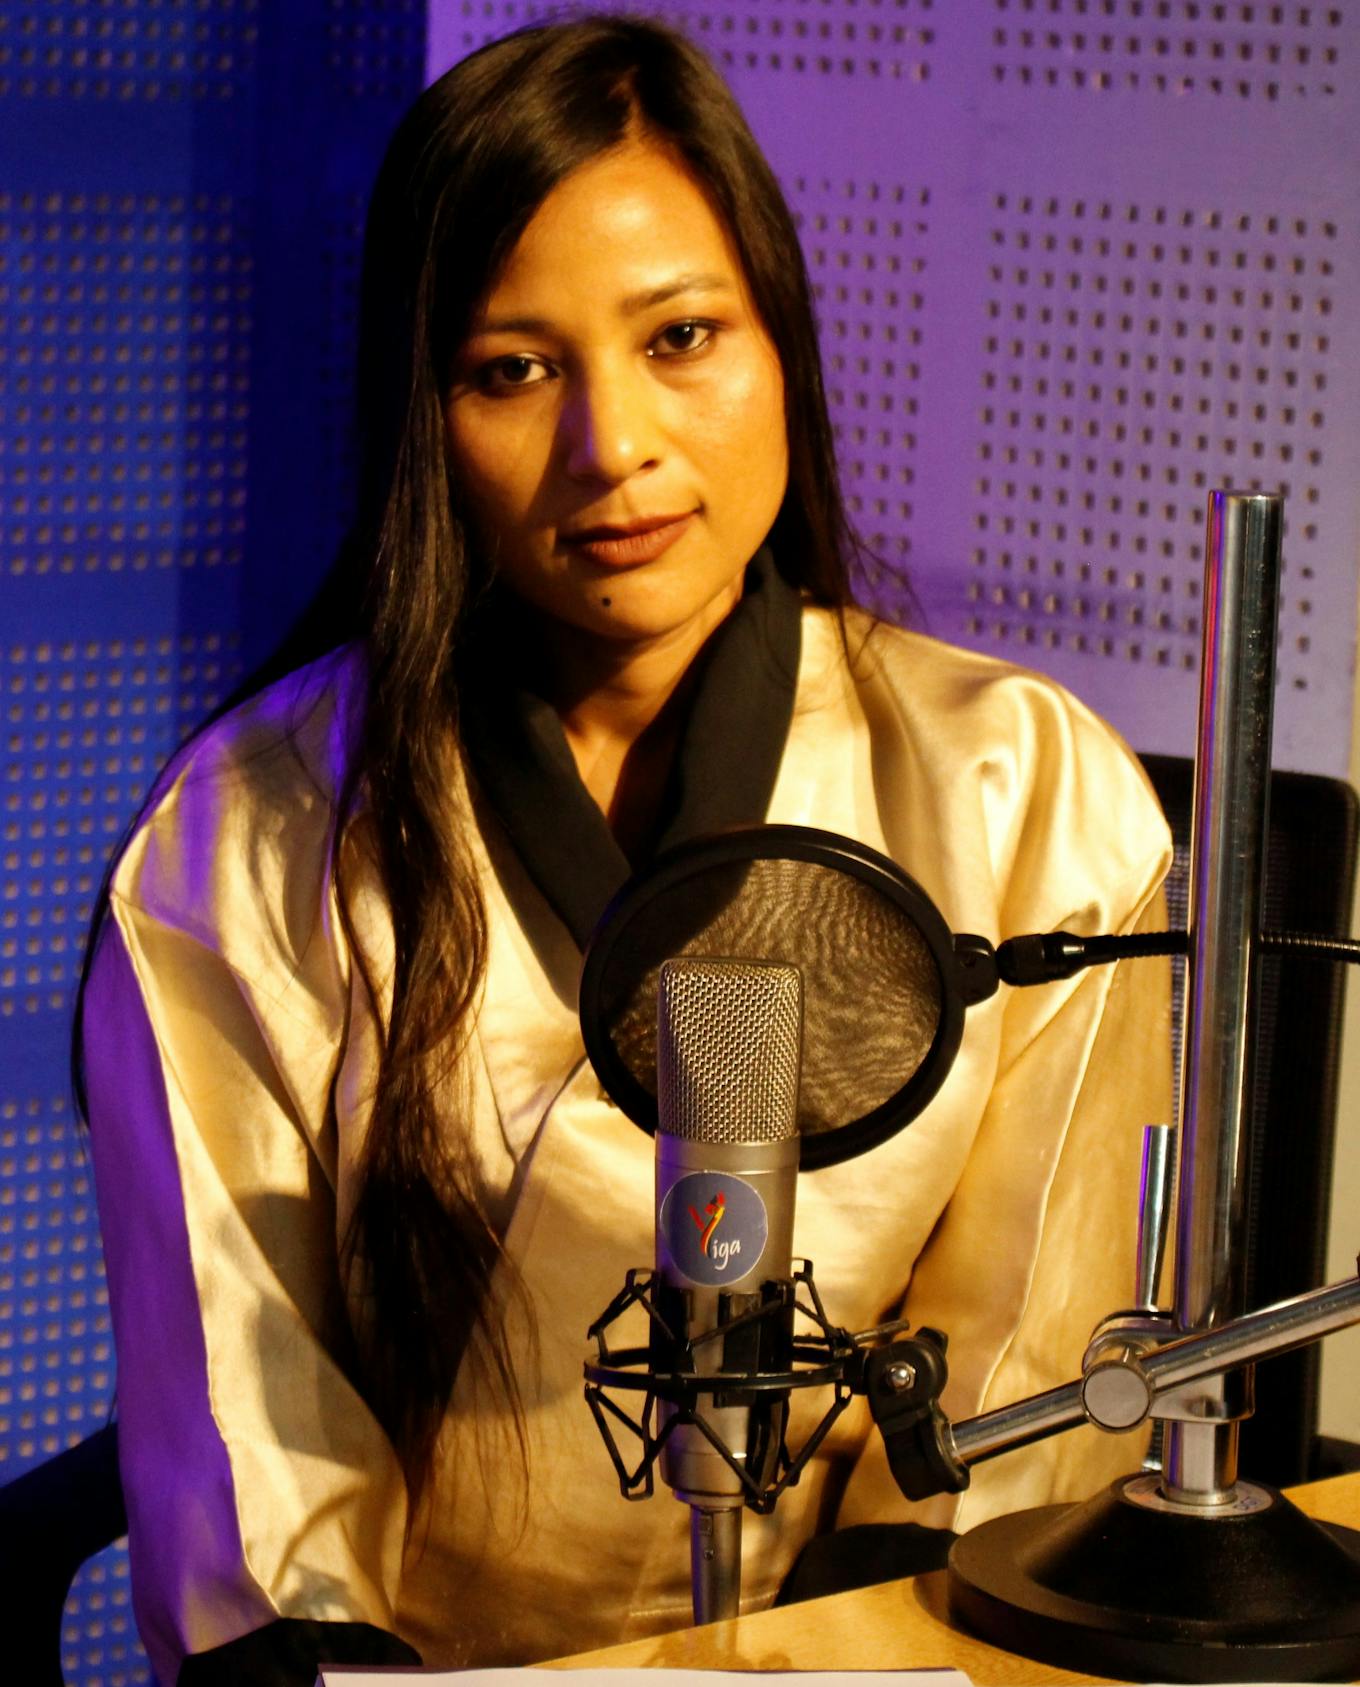 Sumitra Pradhan, radio jockey from Bhutan.